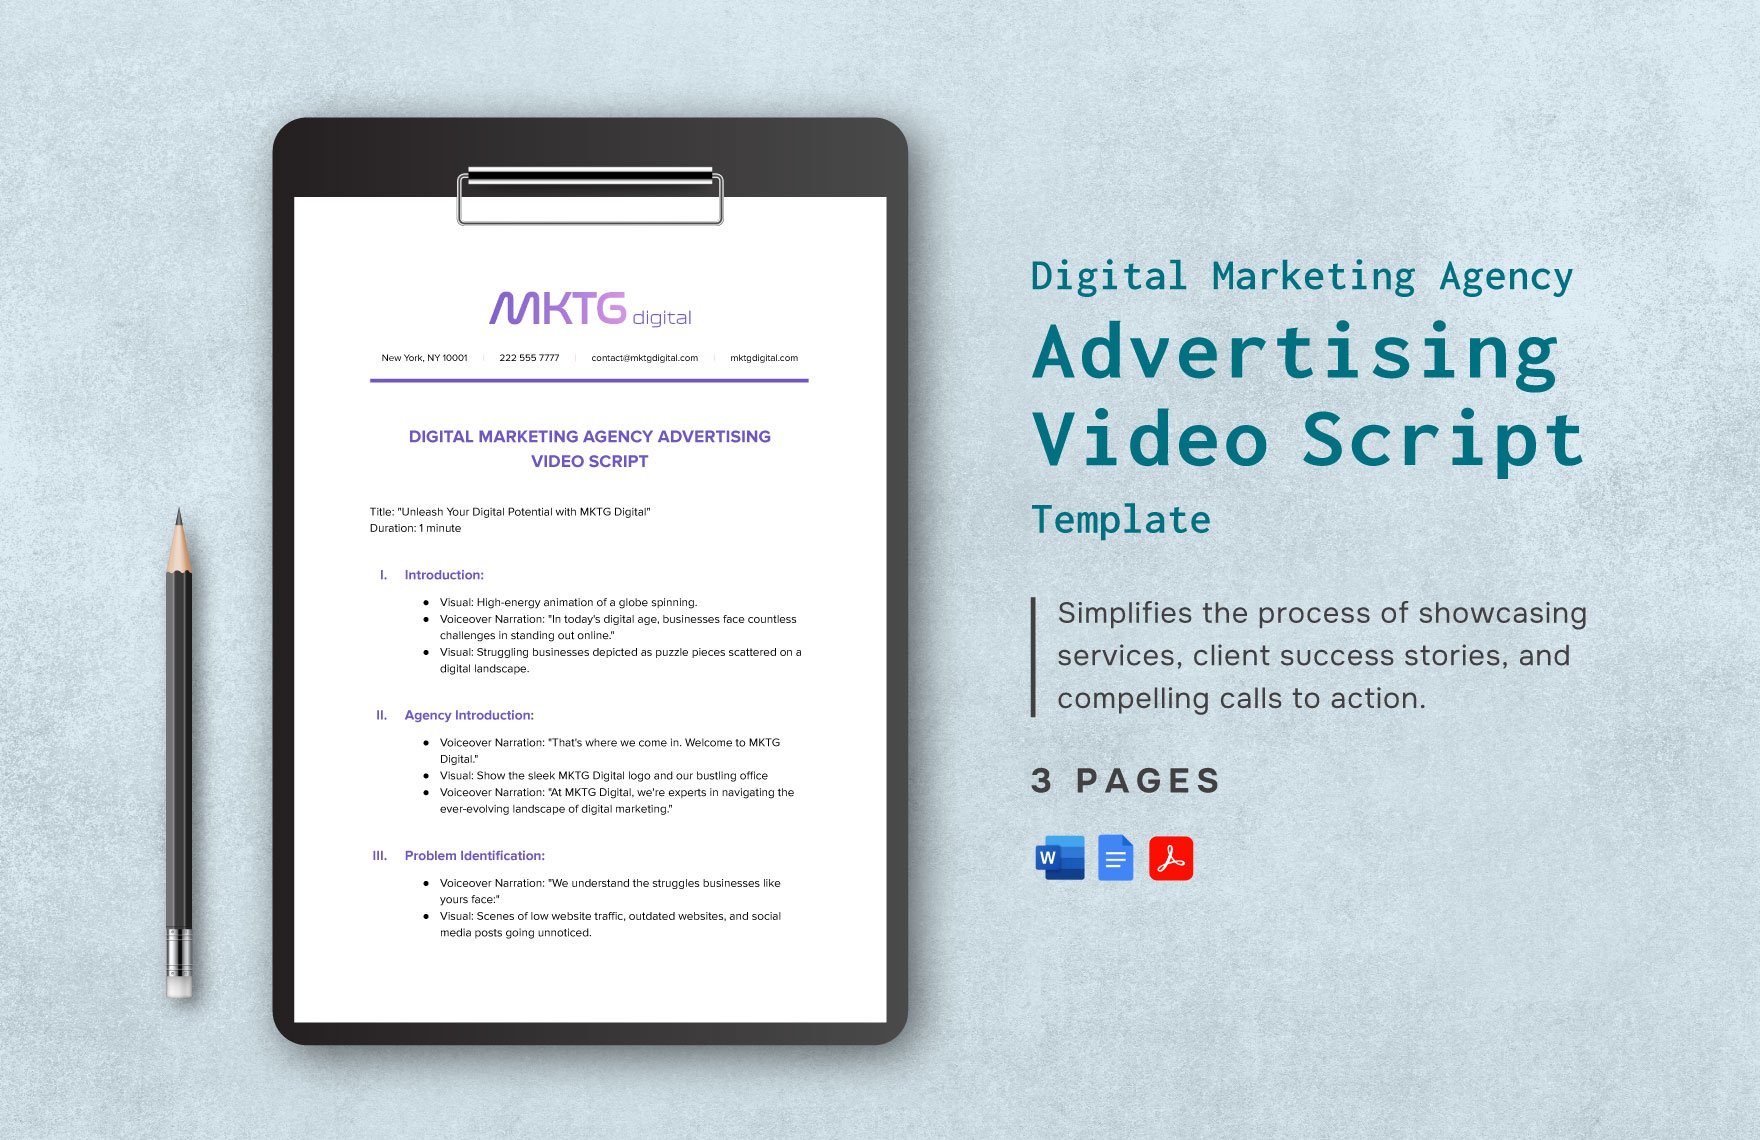 Digital Marketing Agency Advertising Video Script Template